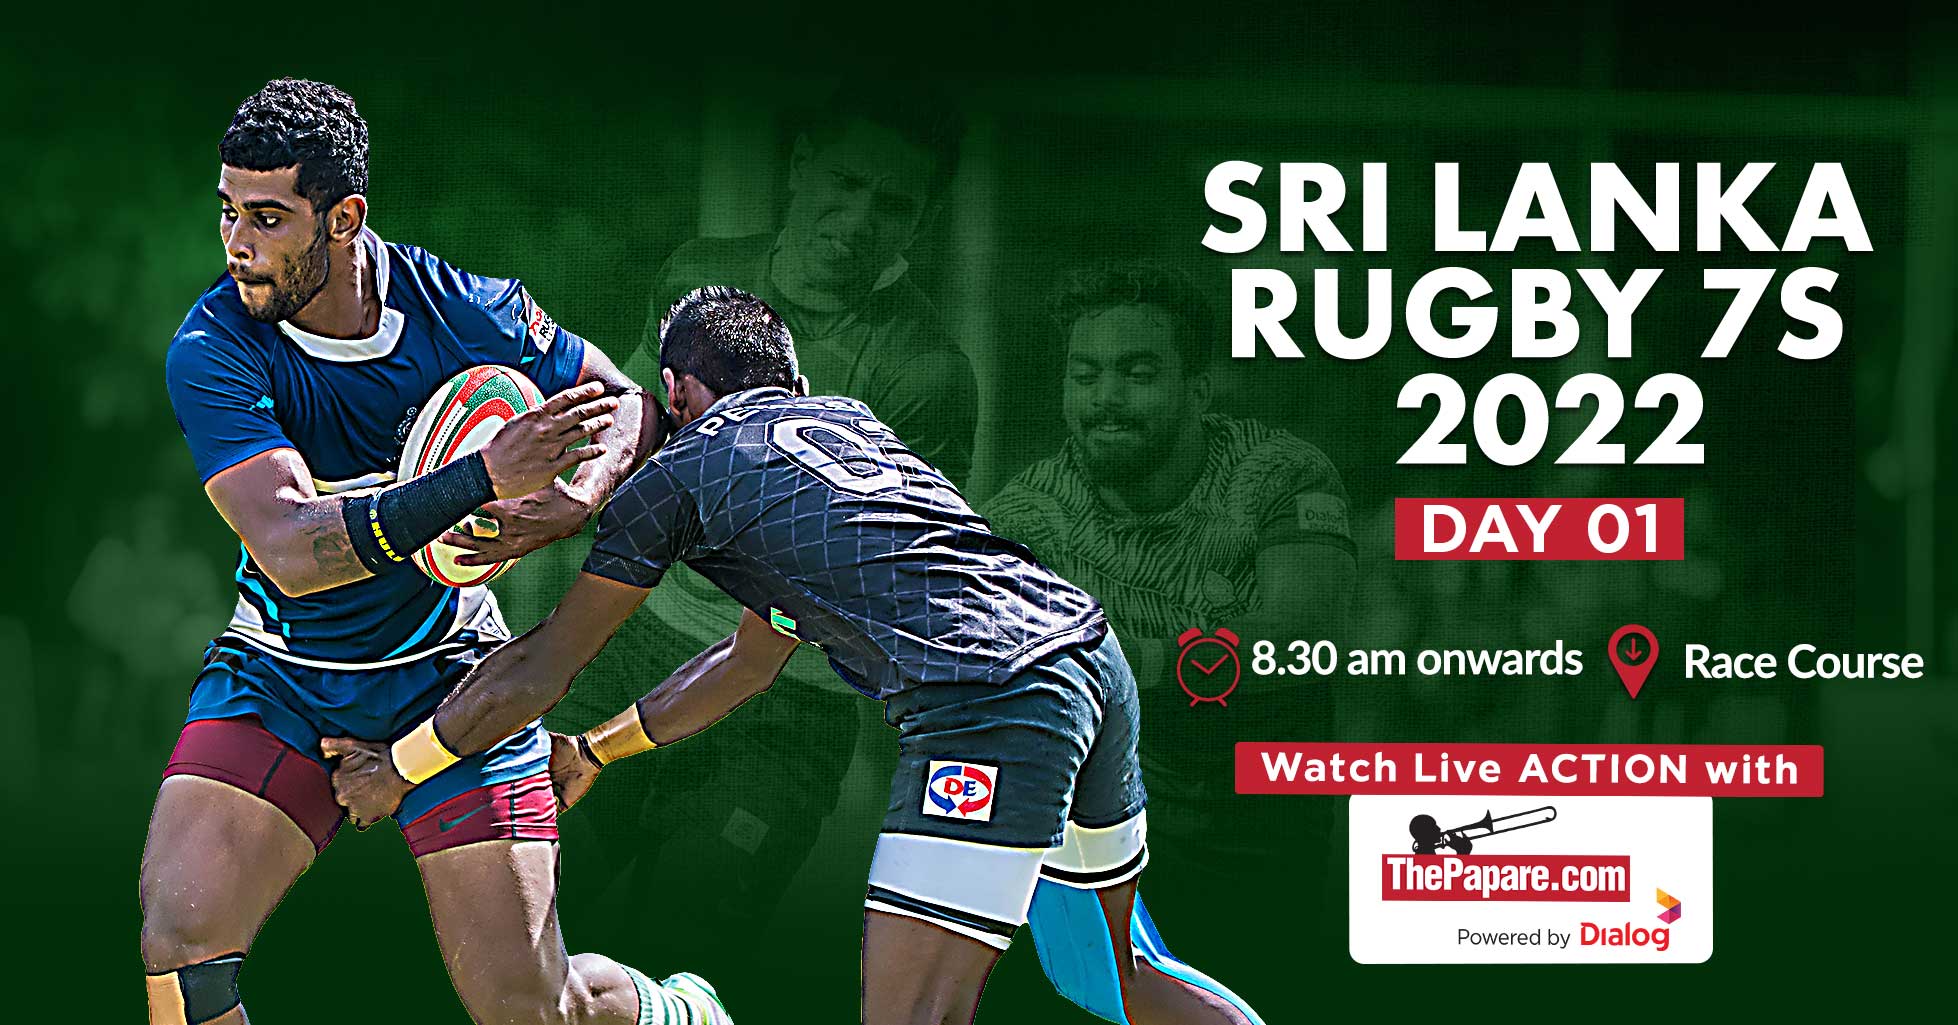 REPLAY - Sri Lanka Rugby 7s 2022